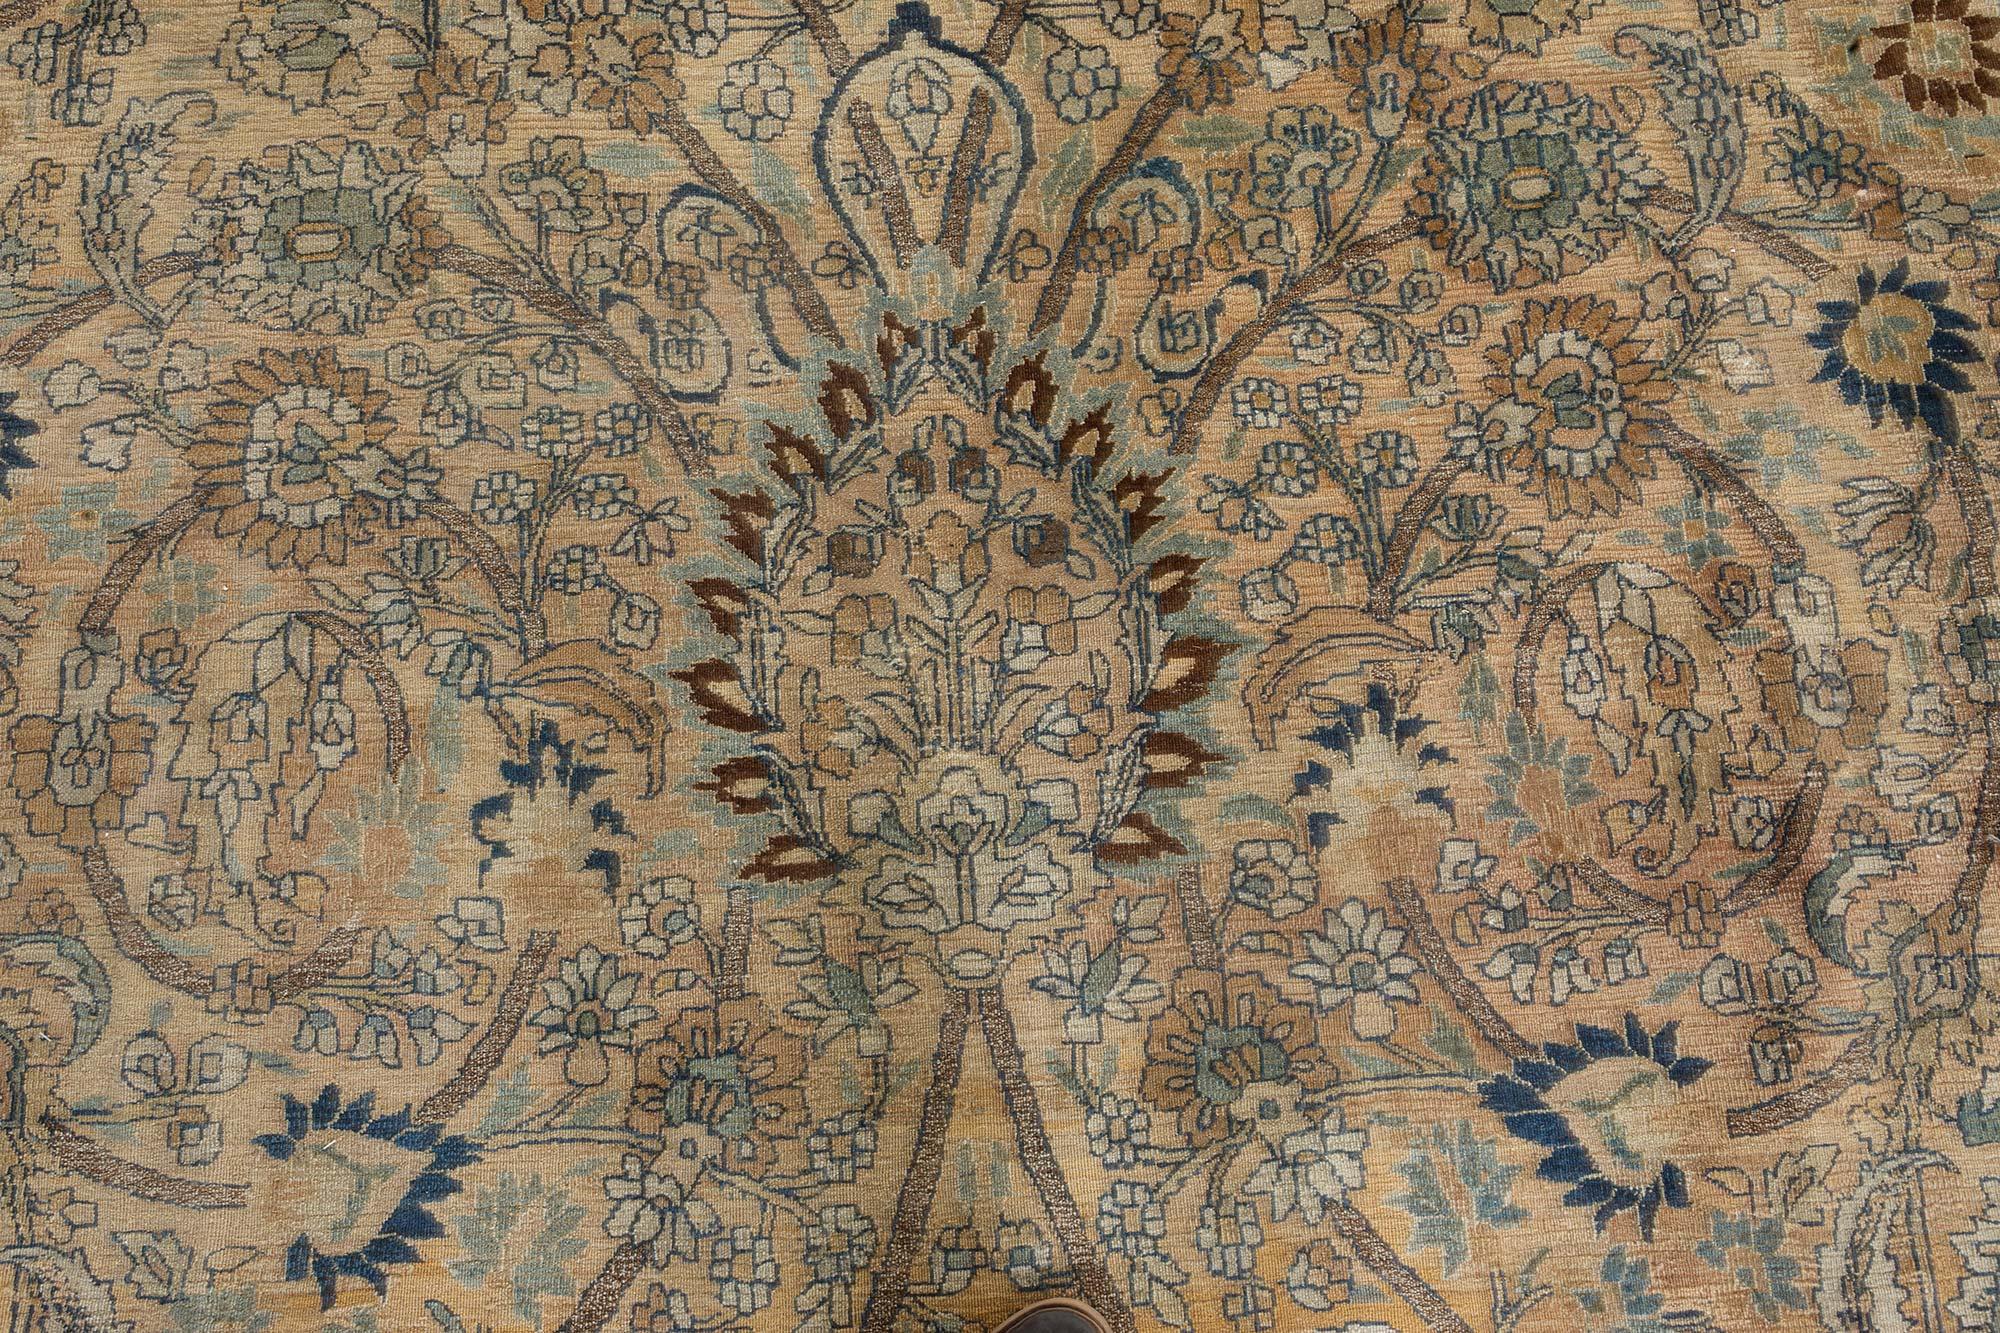 Authentic 19th Century Persian Meshad Handmade Wool Carpet
Size: 11'9